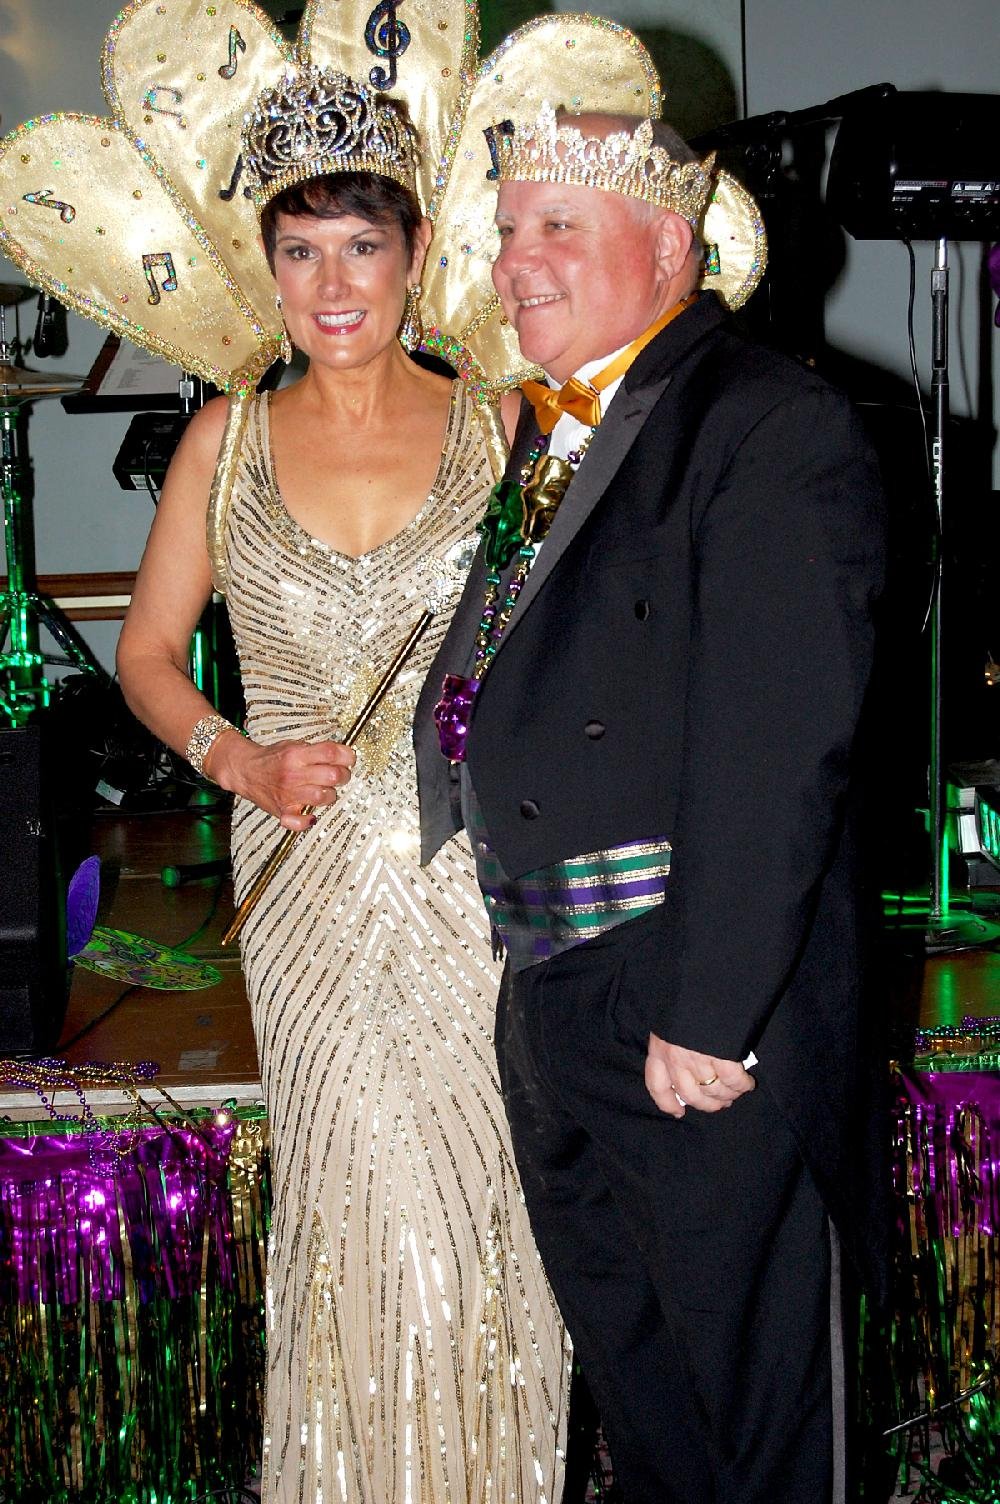 Mardi Gras Costume Ball & Contest | The Arkansas Democrat-Gazette ...